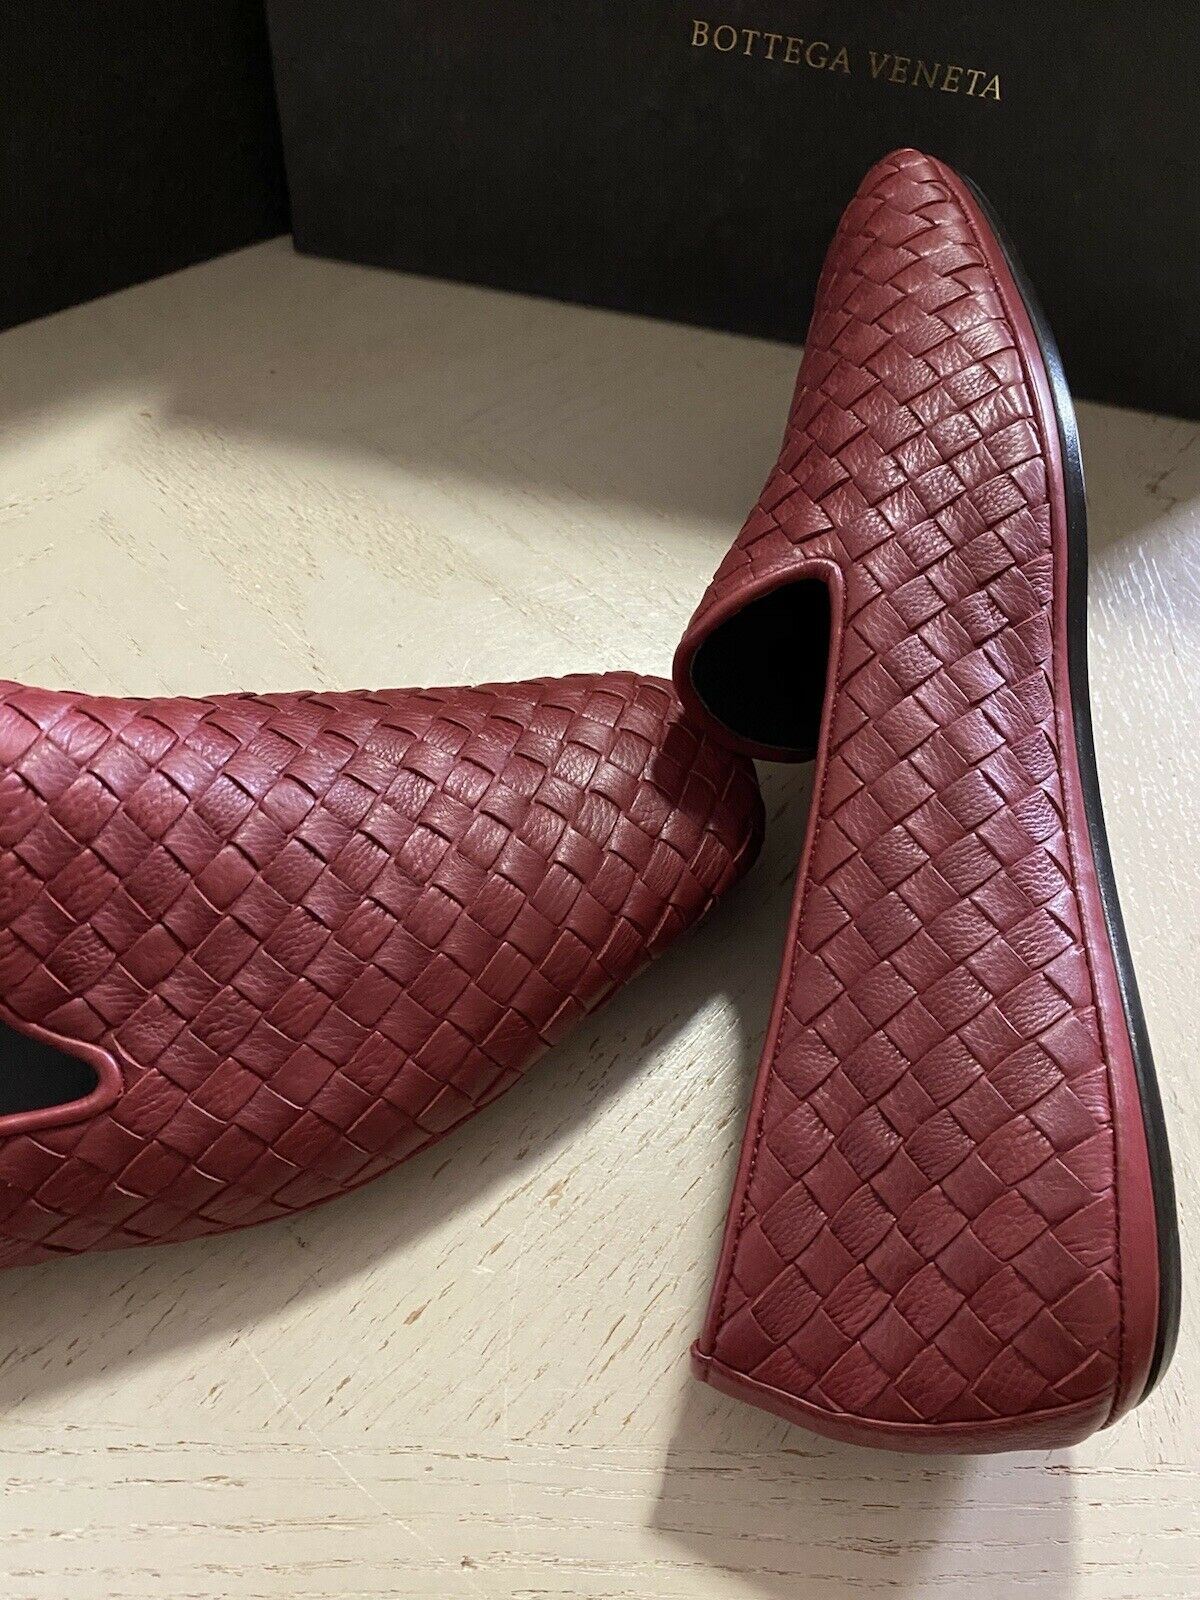 NIB $810 Bottega Veneta Men Leather Loafers Shoes Burgundy/Red 8.5 US/41.5 Eu